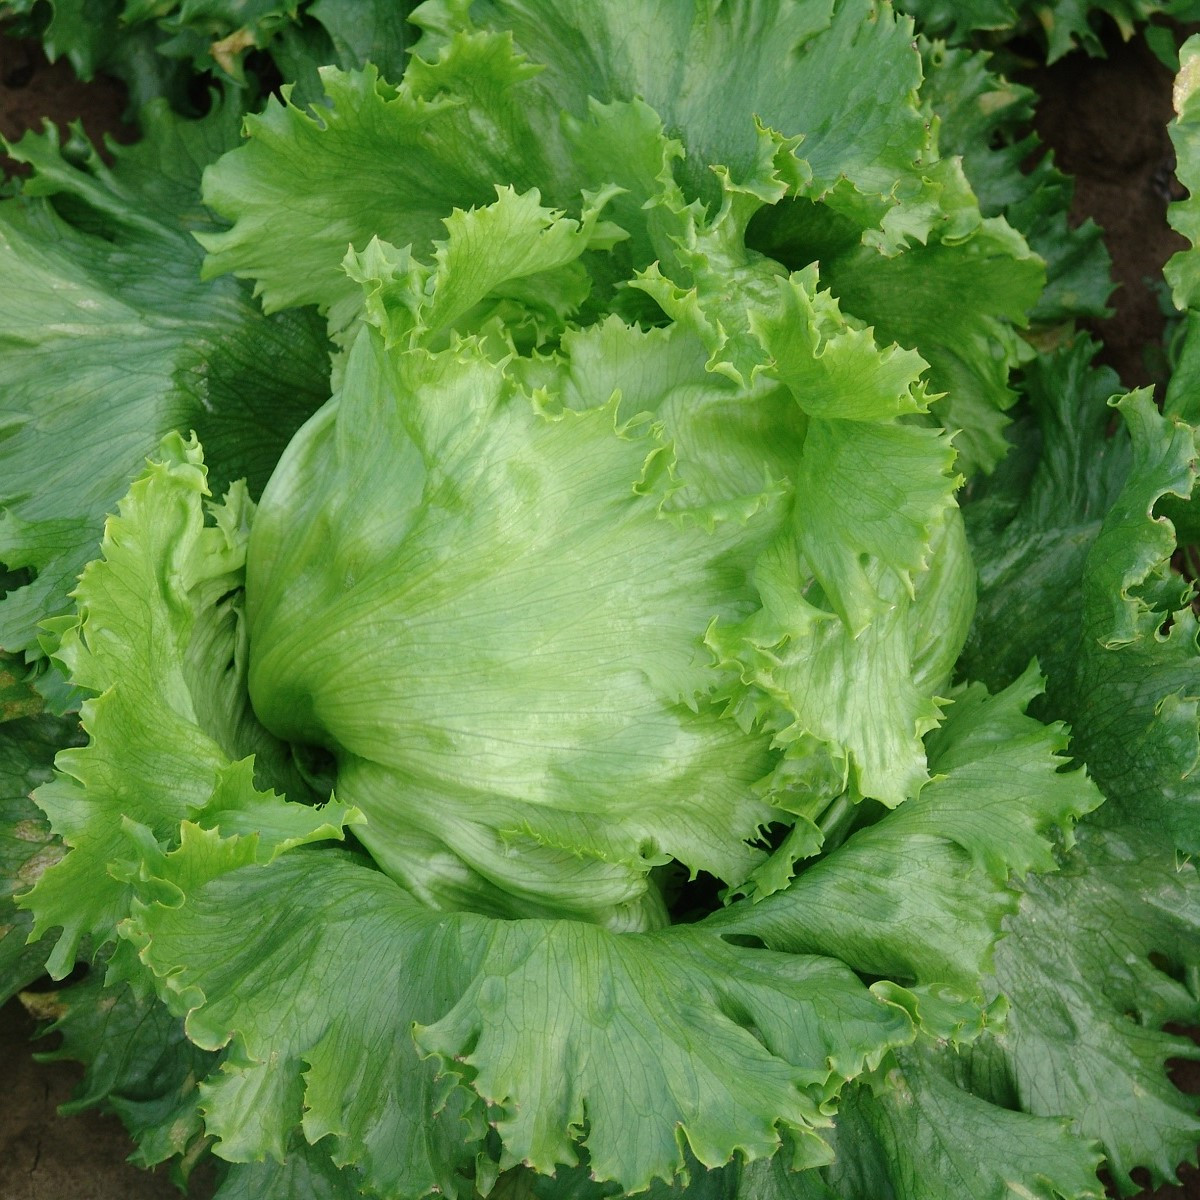 Salát hlávkový letní ledový Traper - Lactuca sativa L. - osivo salátu - 250 ks